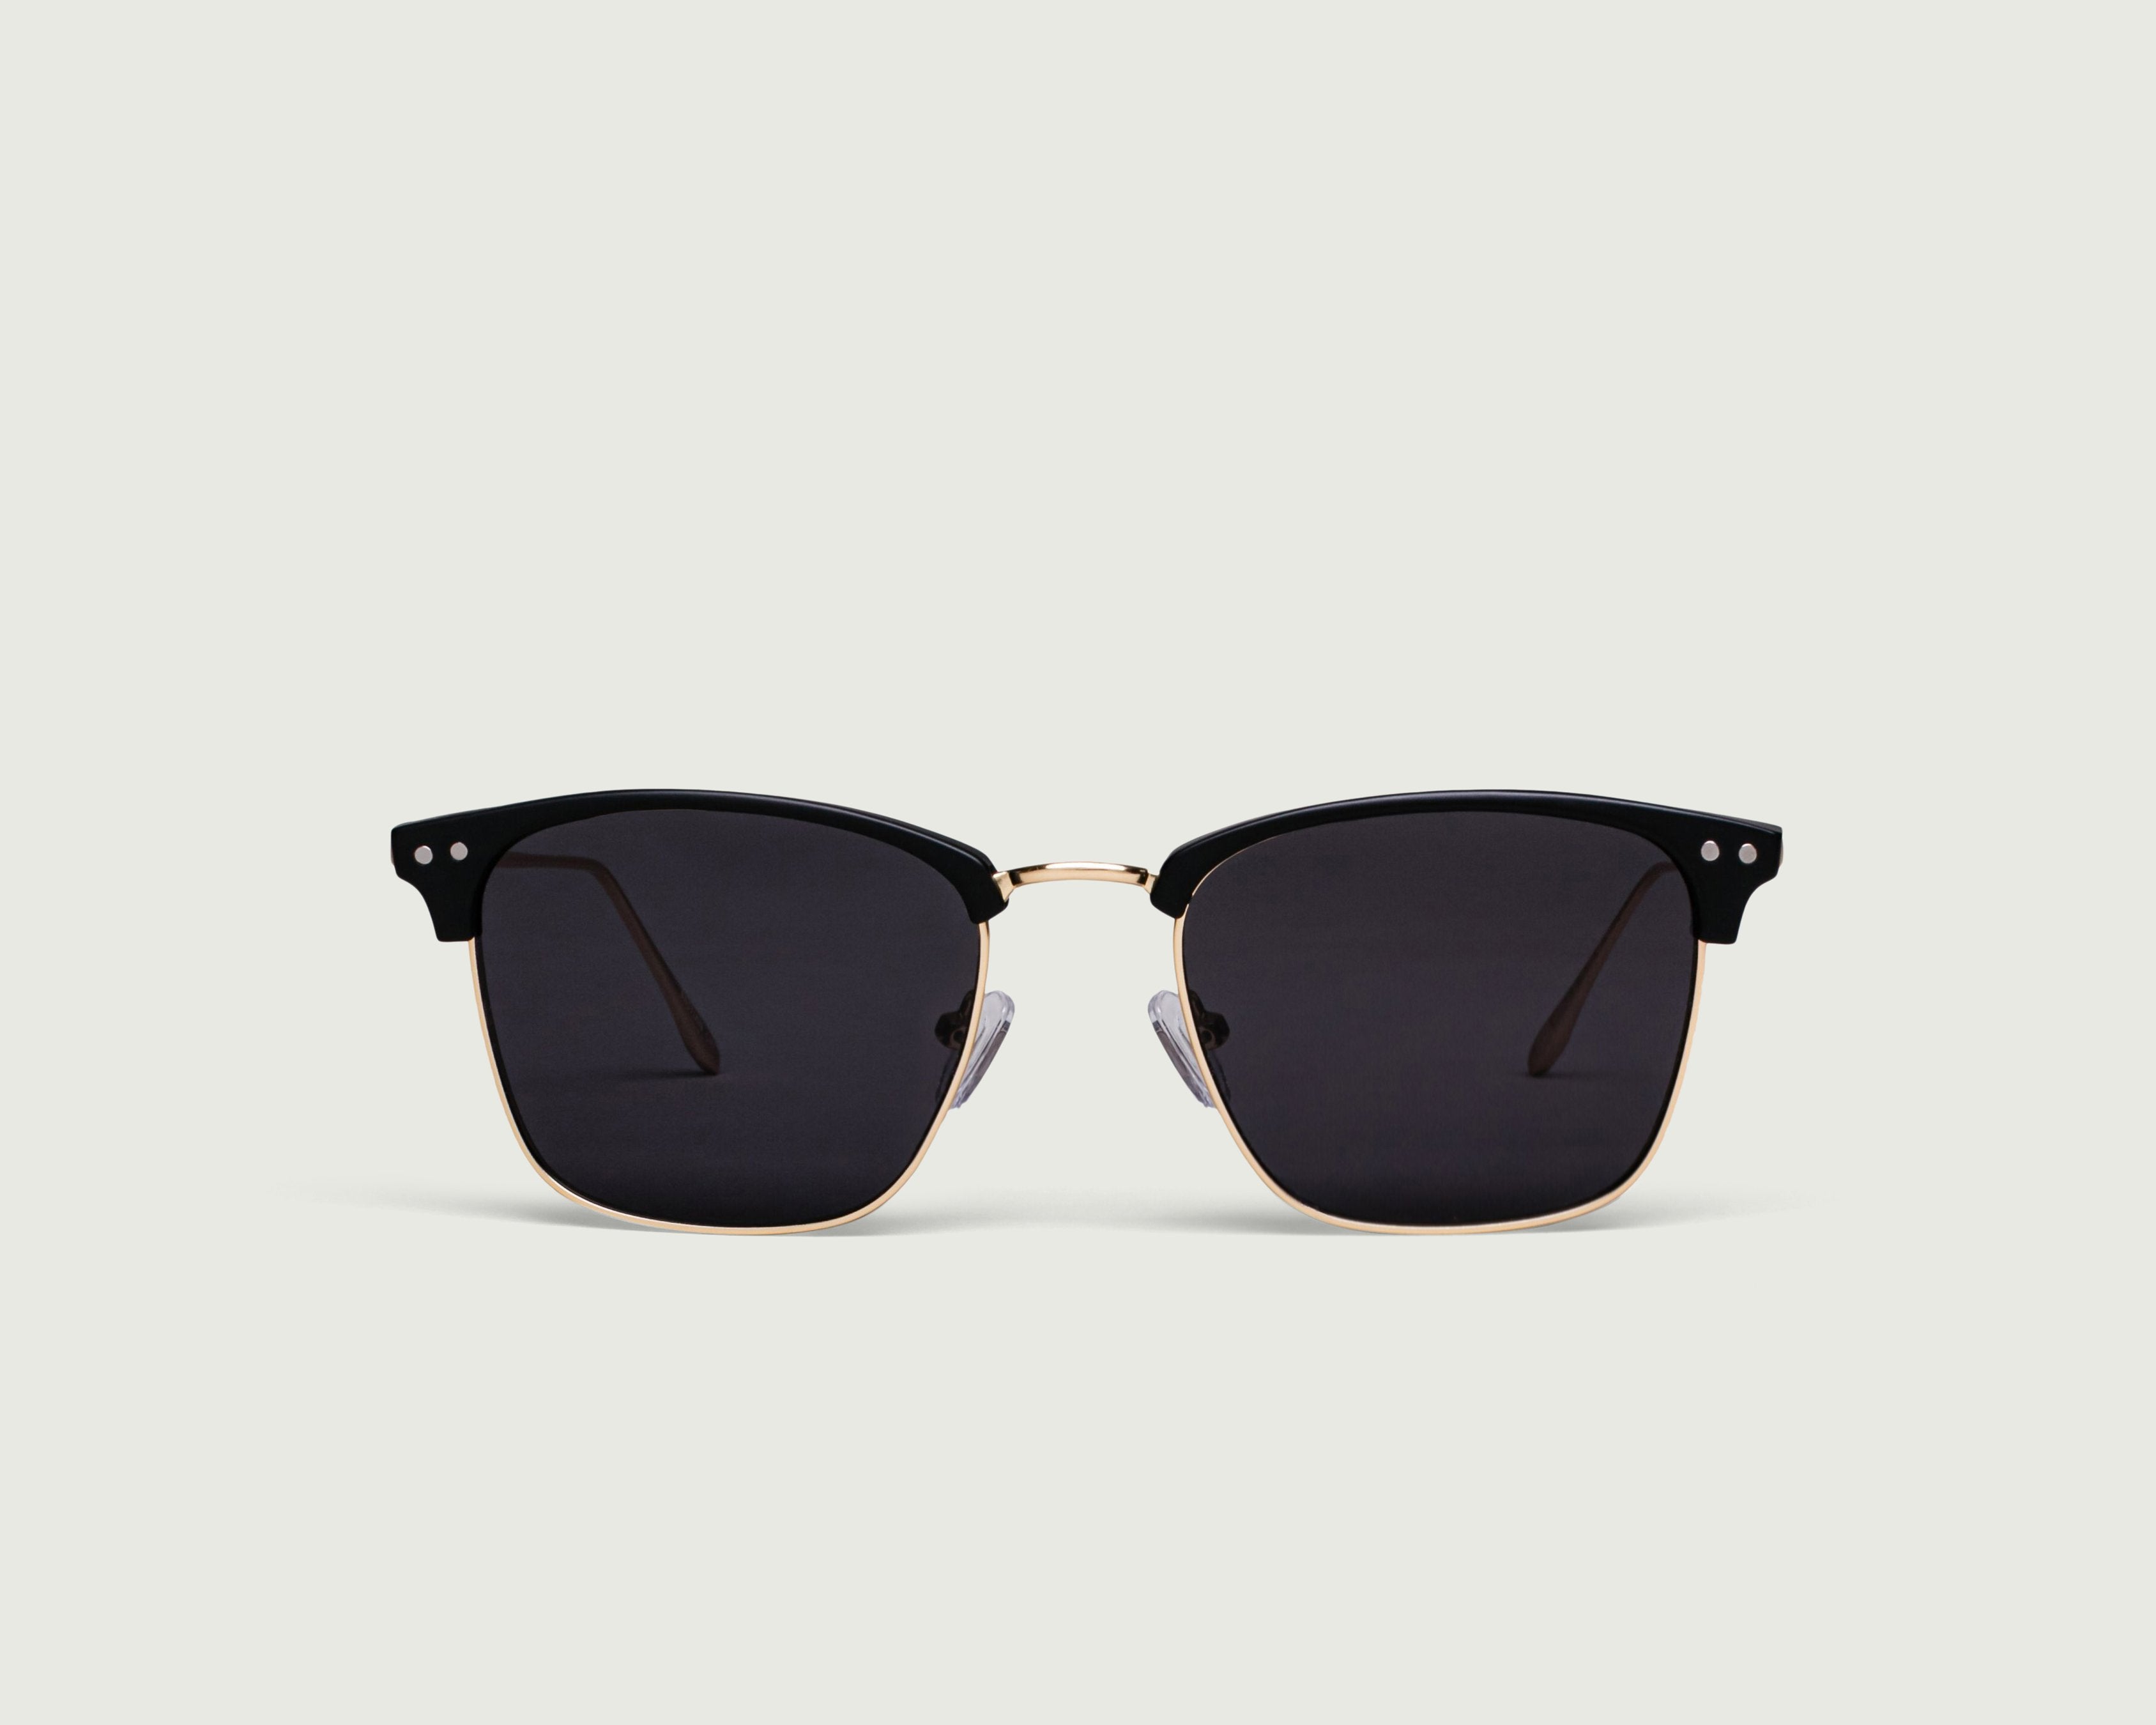 Ore::Bastian Sunglasses browline gold metal plastic front